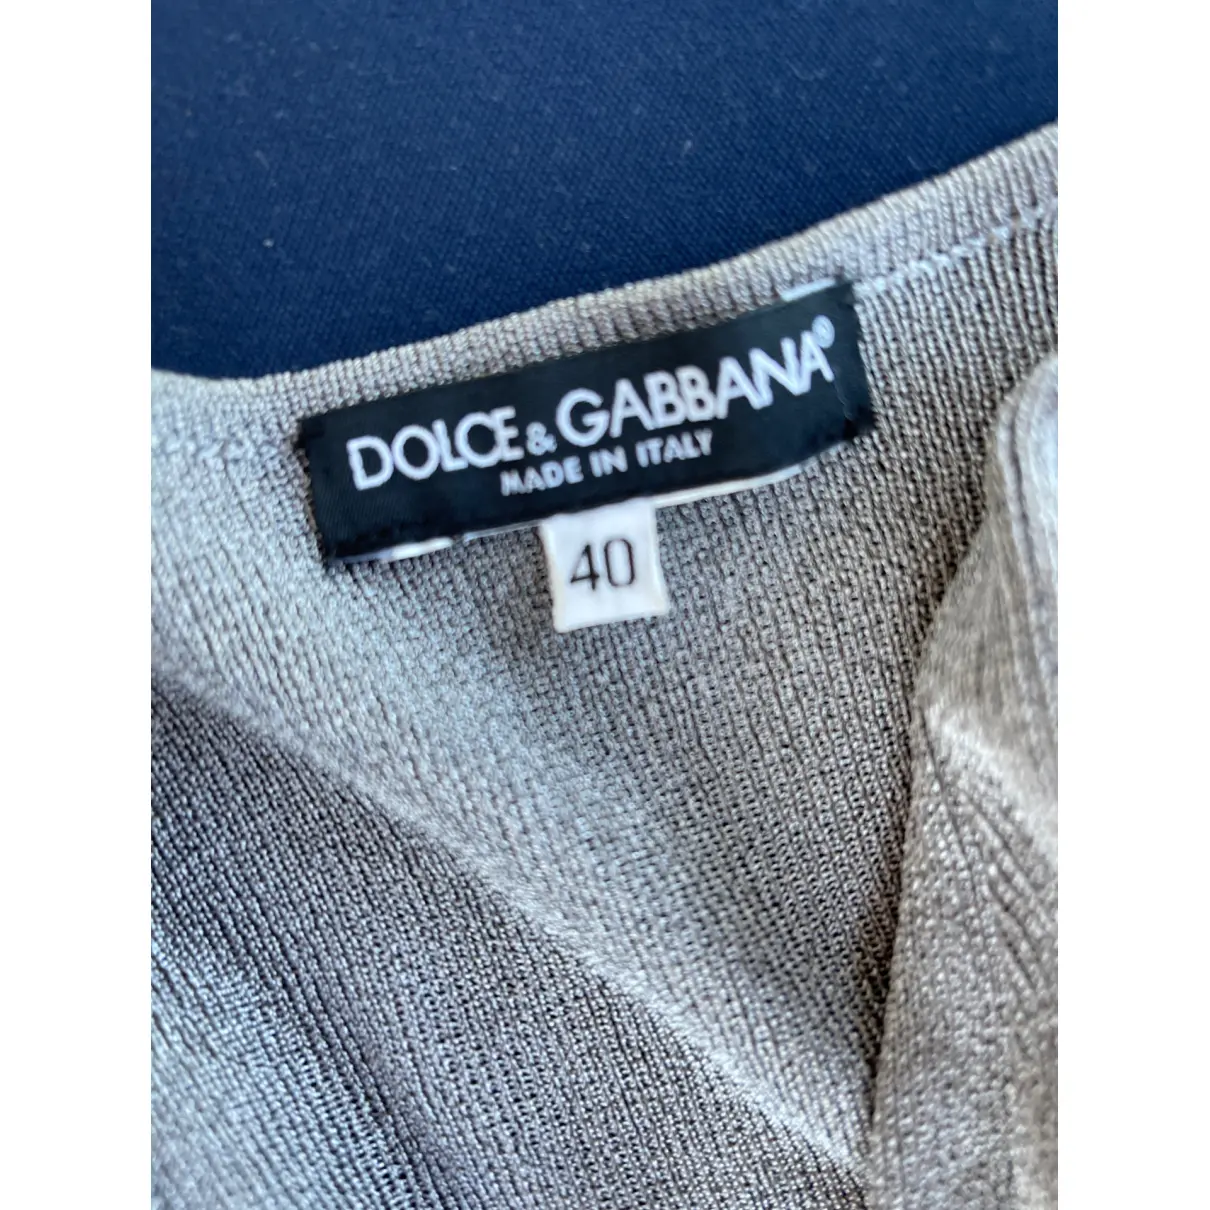 Buy Dolce & Gabbana Twin-set online